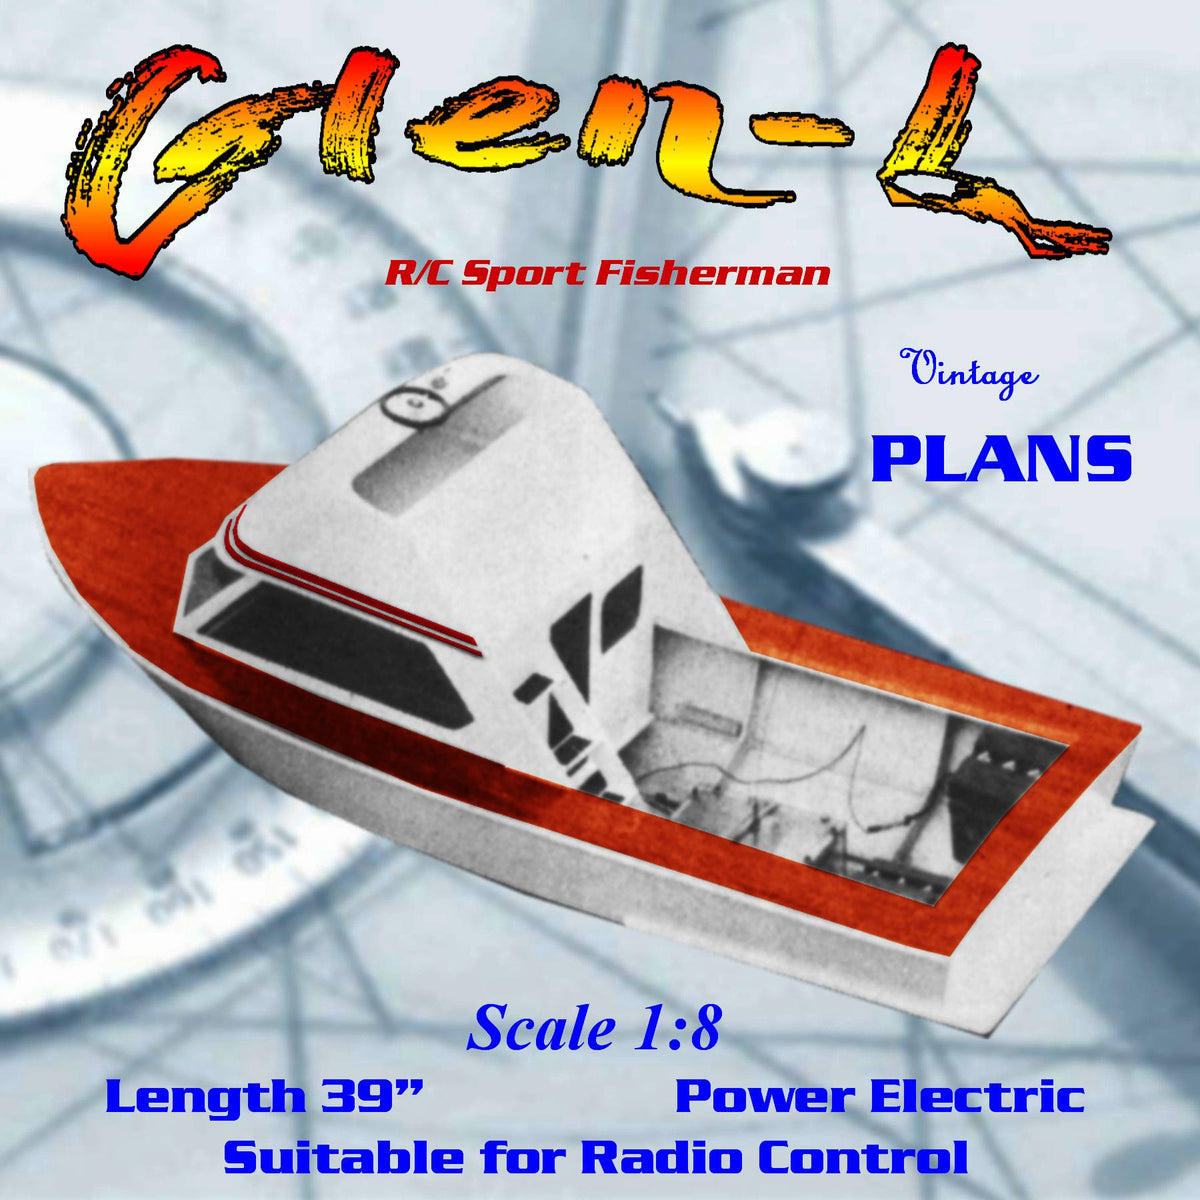 Build a 1/8 Scale R/C Glen-L Sport Fisherman Full size printed